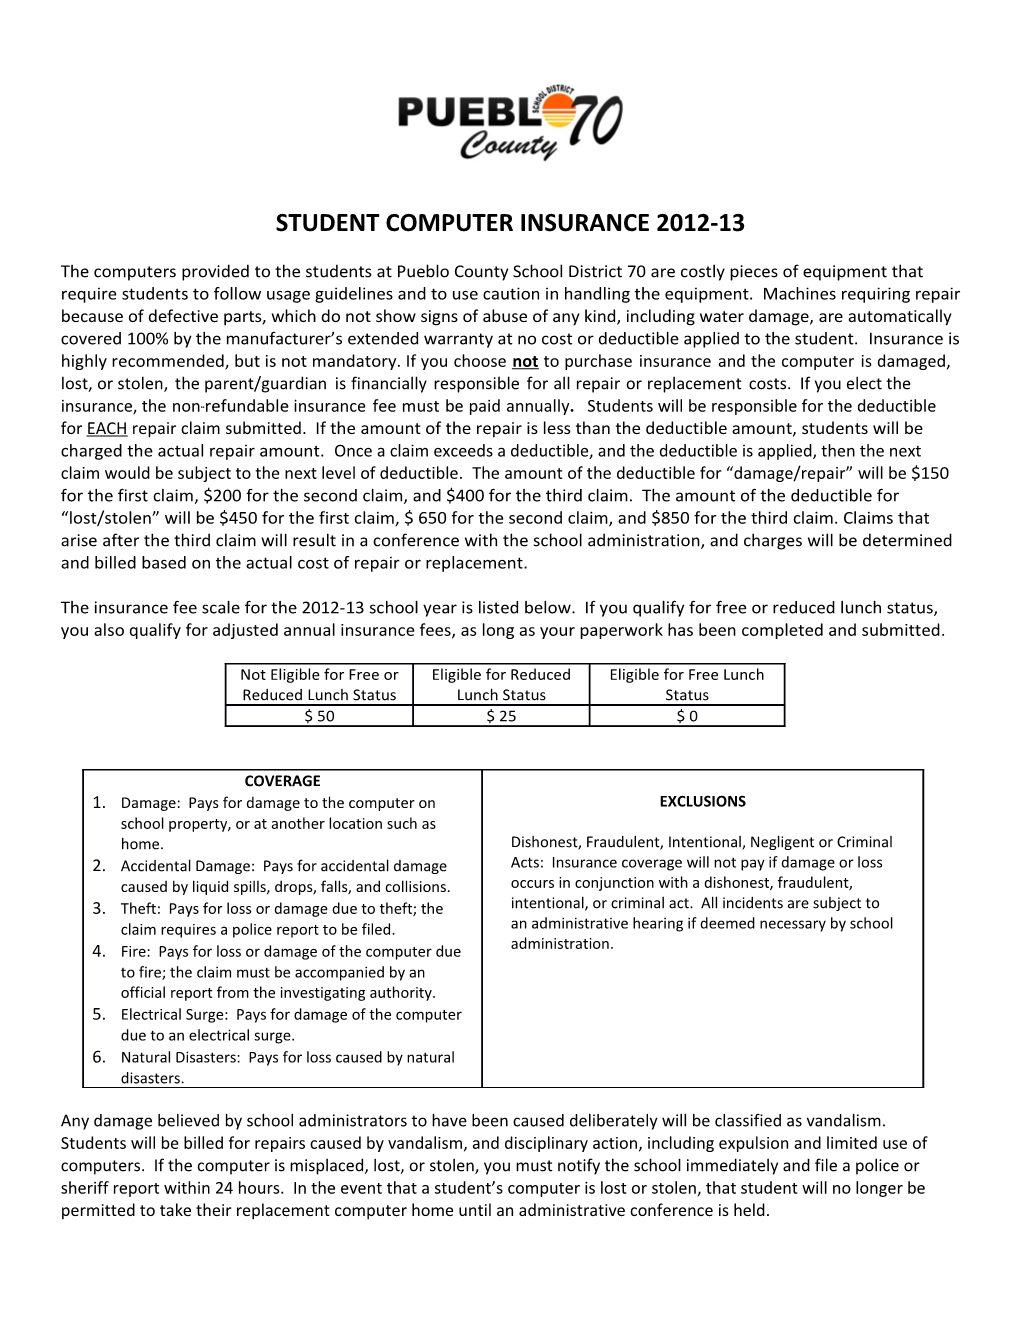 Student Computer Insurance 2012-13